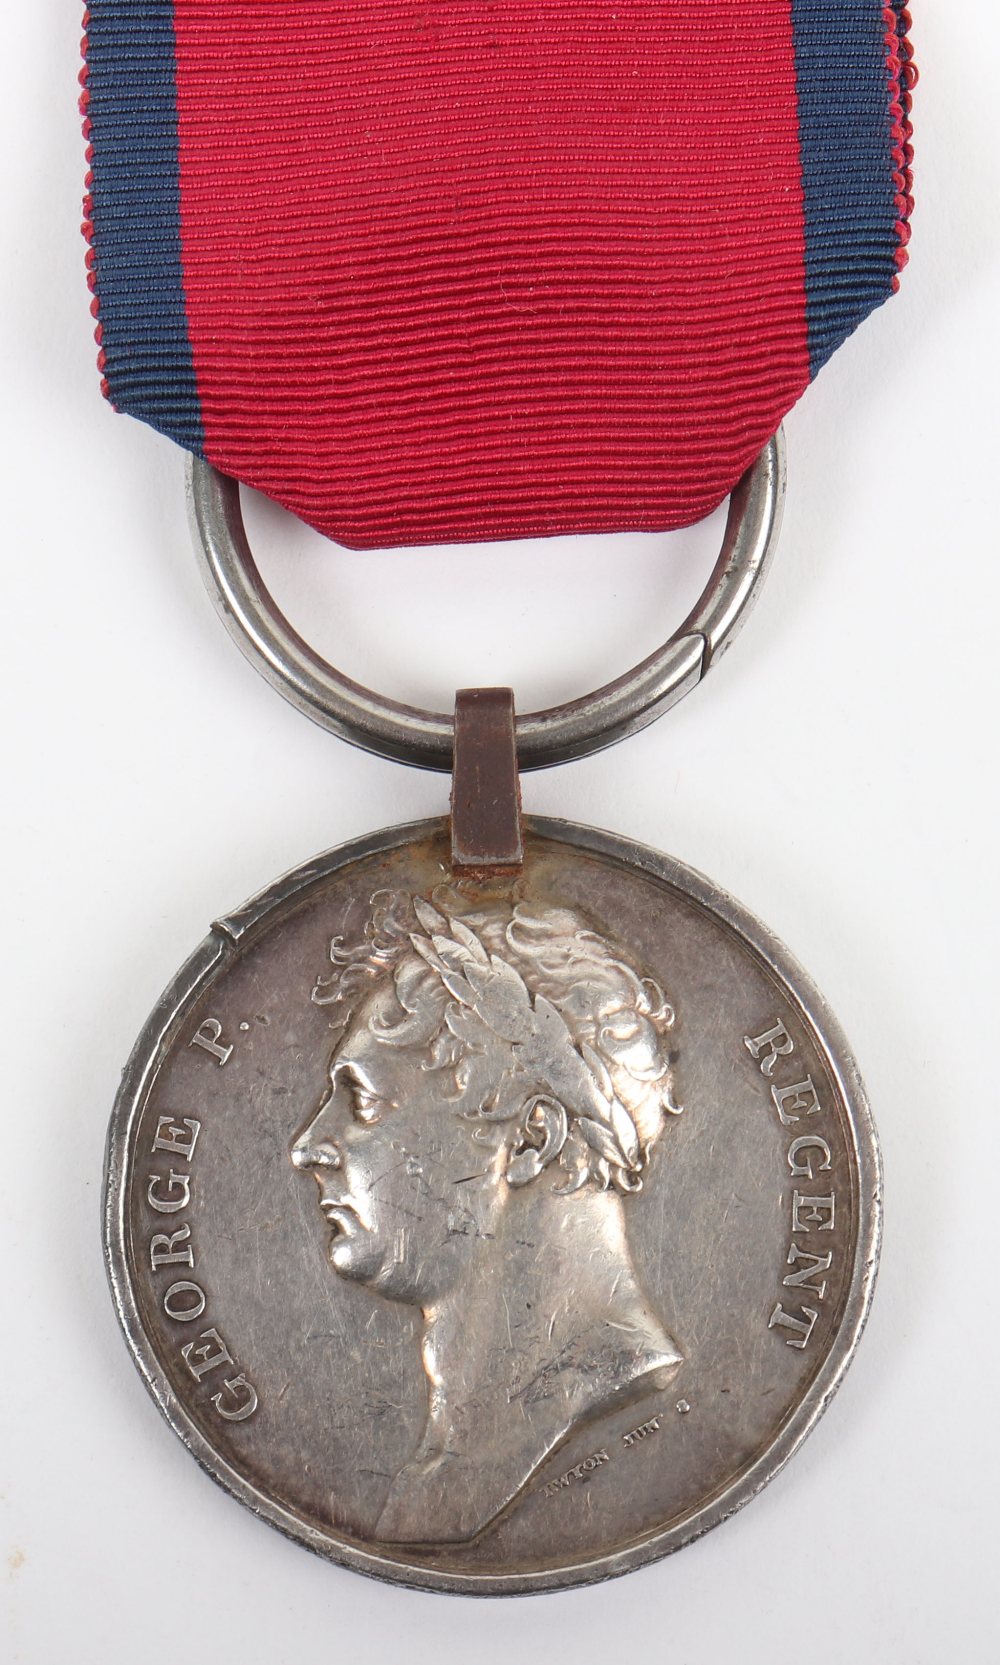 British Waterloo Medal 1815 Royal Foot Artillery, Member of Captain Sandham’s Company, said to be th